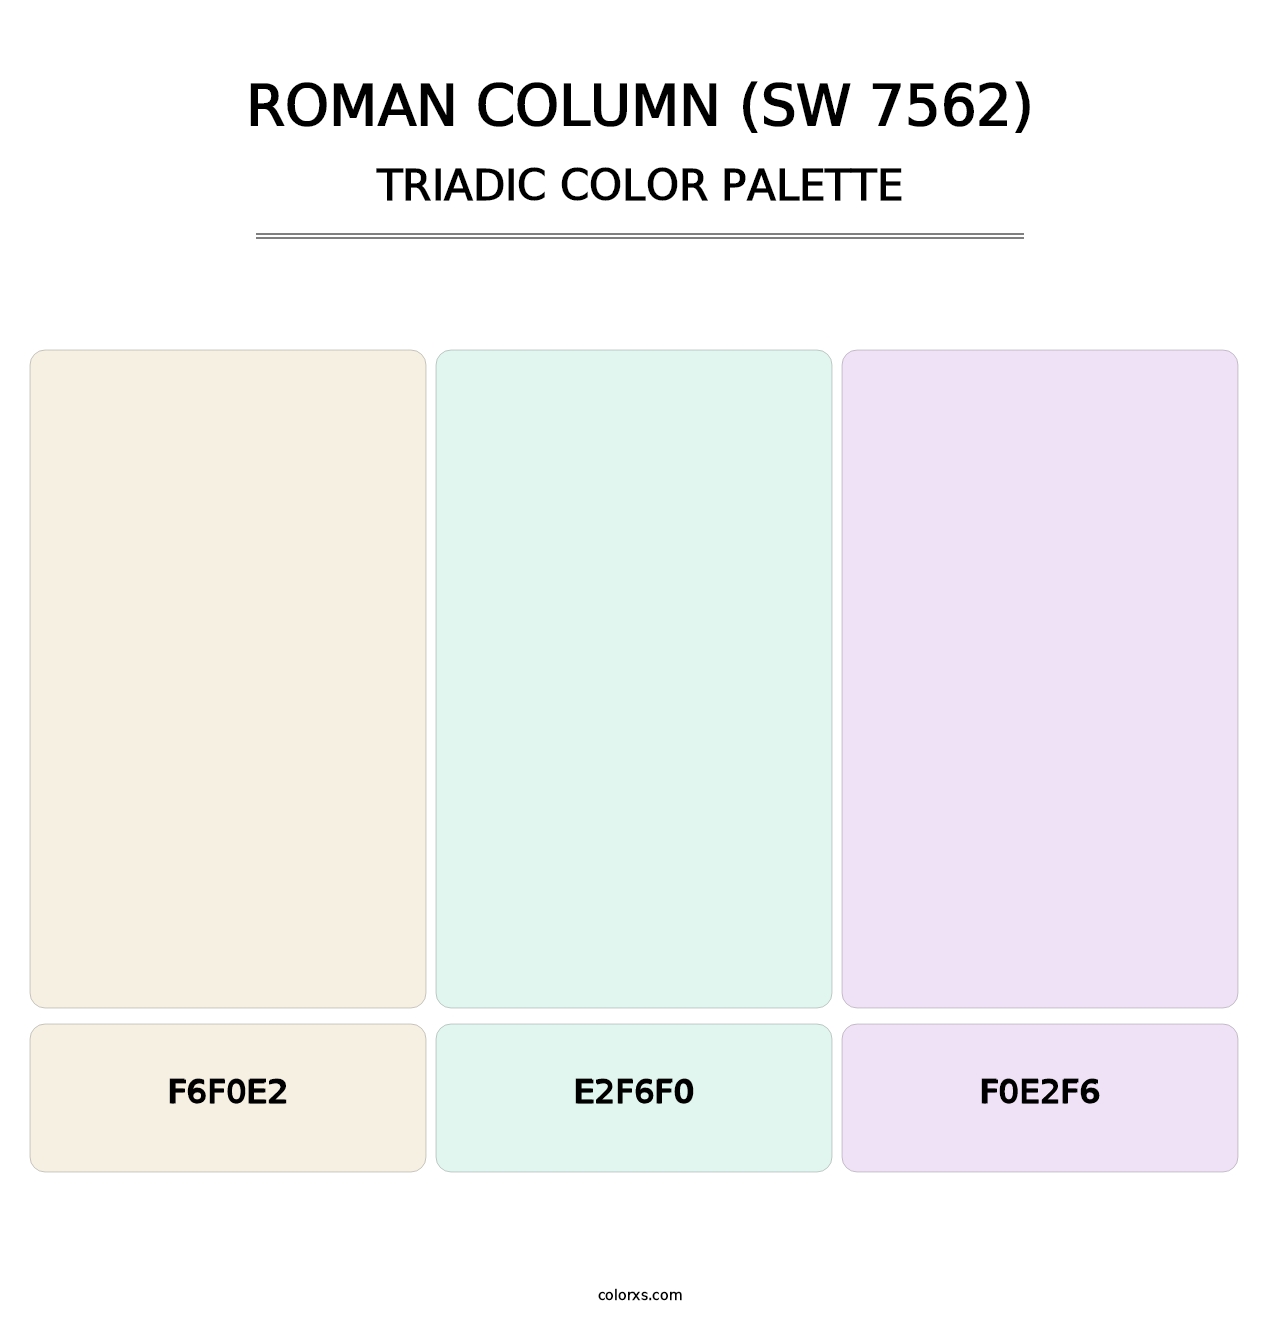 Roman Column (SW 7562) - Triadic Color Palette